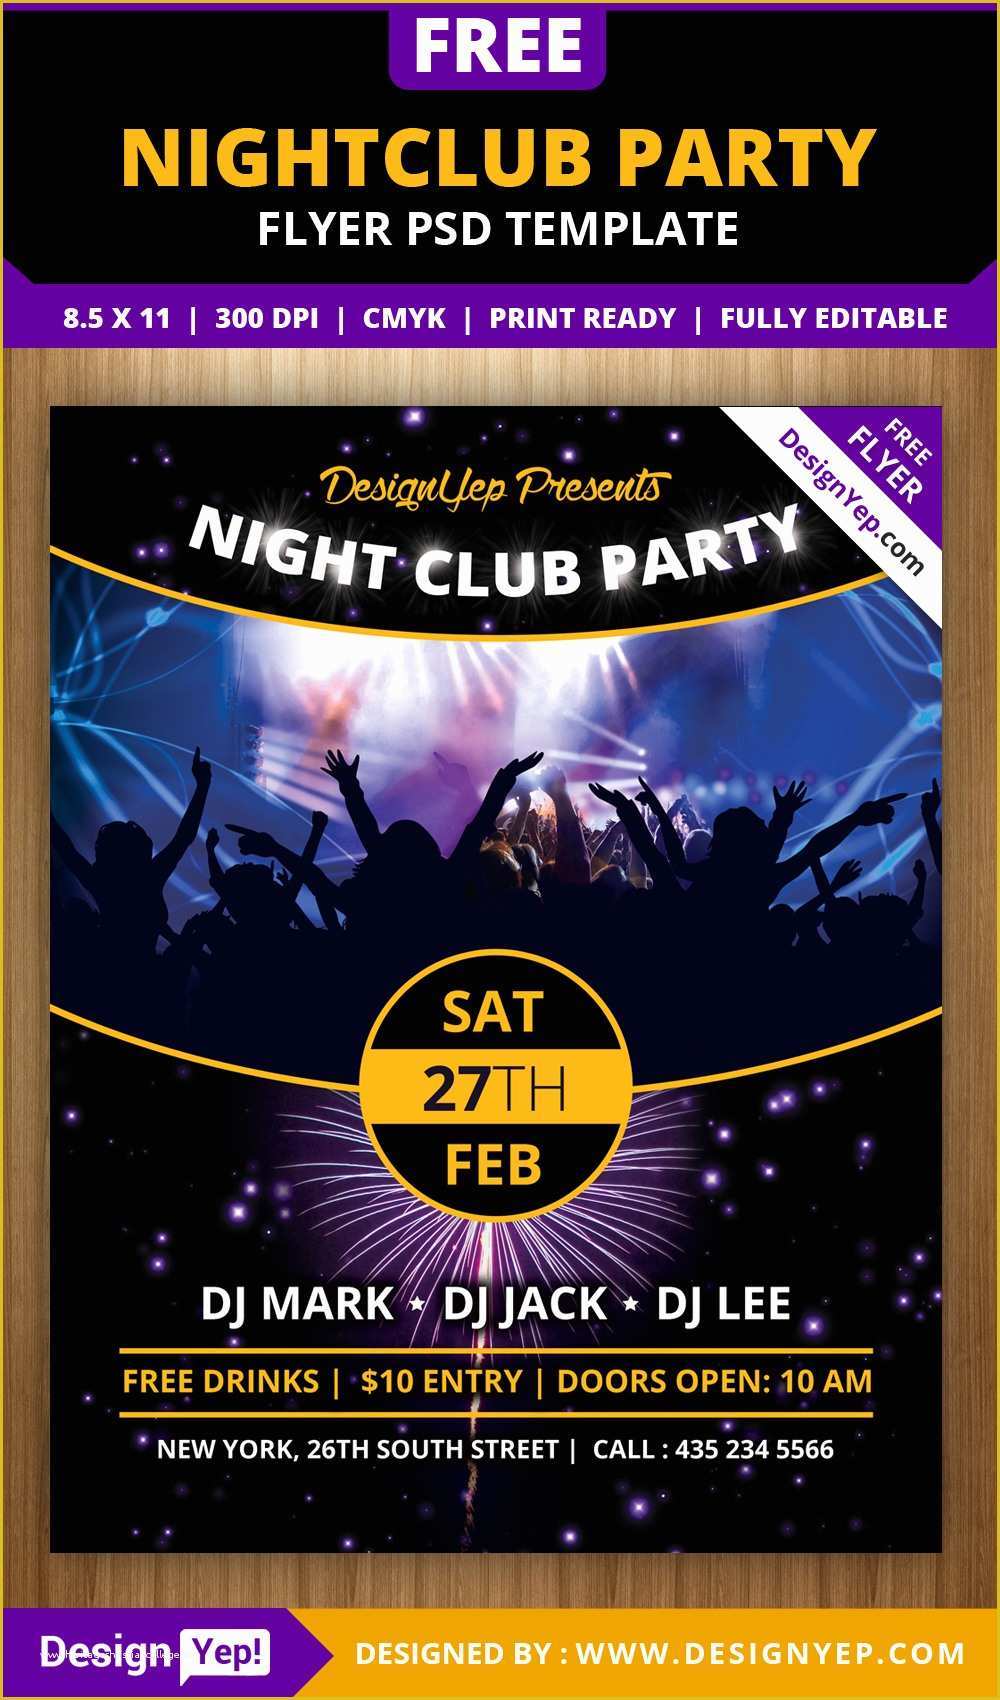 Celebration Flyer Template Free Of Free Nightclub Party Flyer Psd Template Designyep